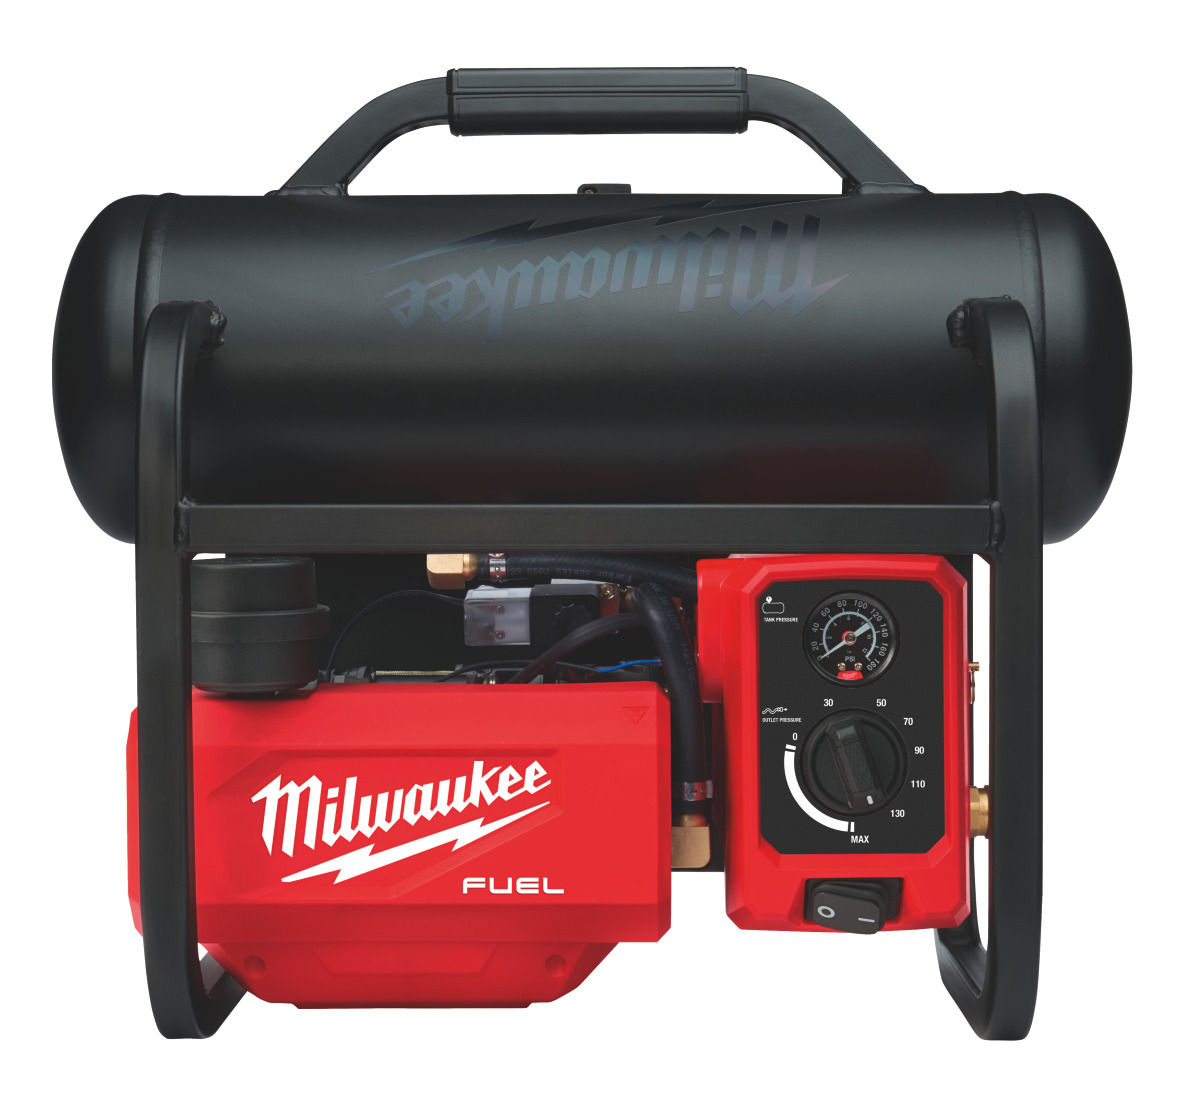 MILWAUKEE - Ingrassatore a batteria da 562 bar, Modello: M12GG - Metalworker